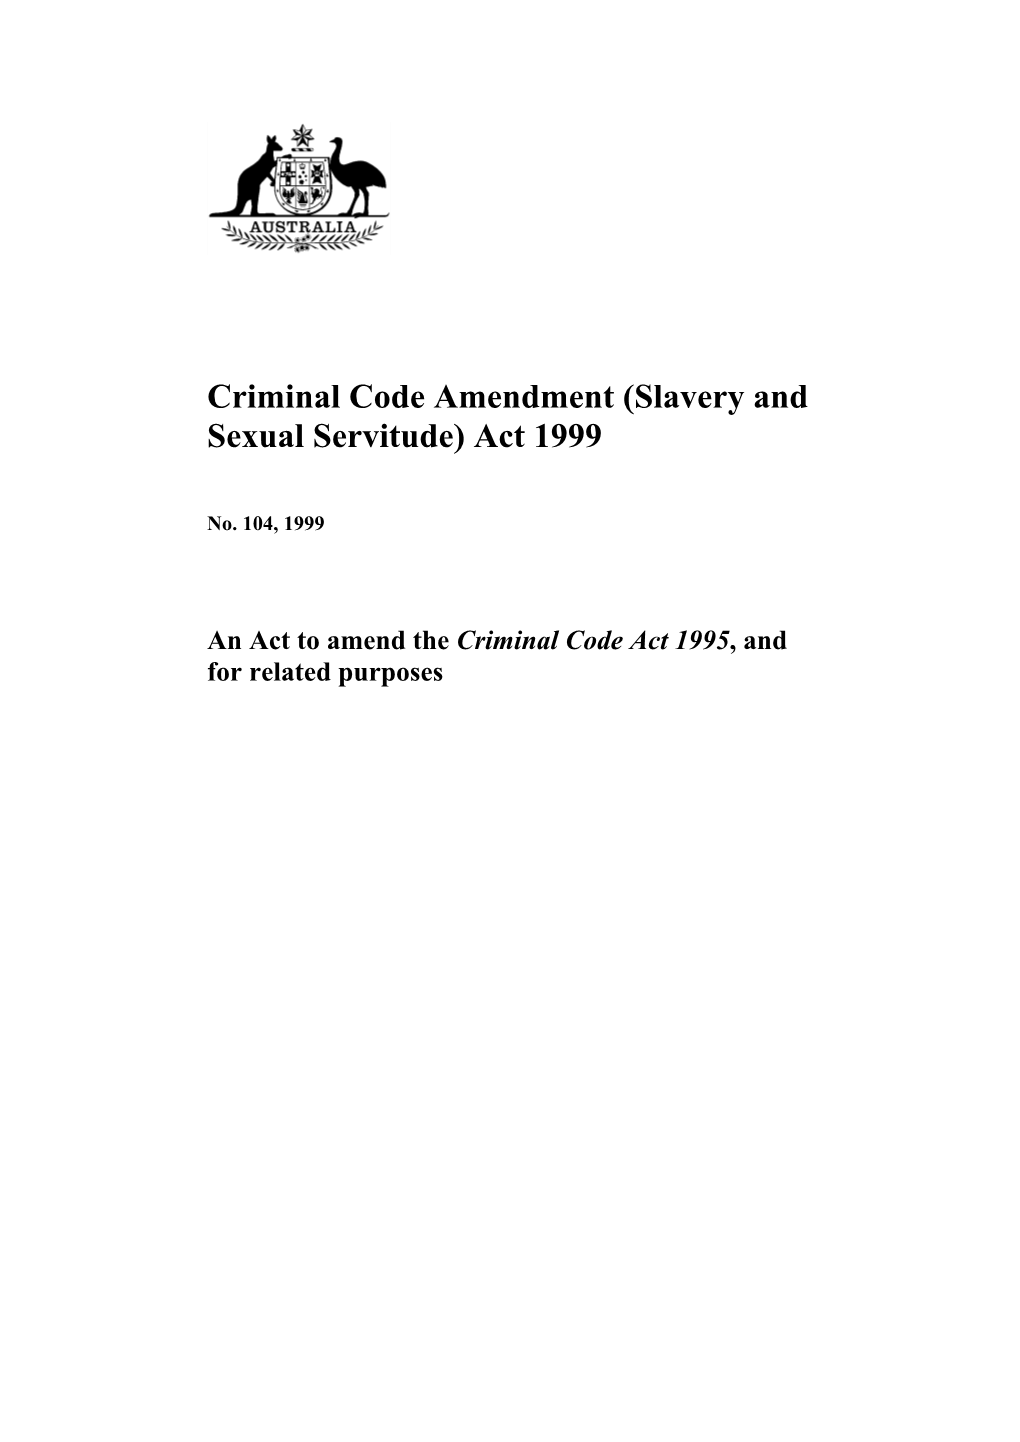 Criminal Code Amendment (Slavery and Sexual Servitude) Act 1999